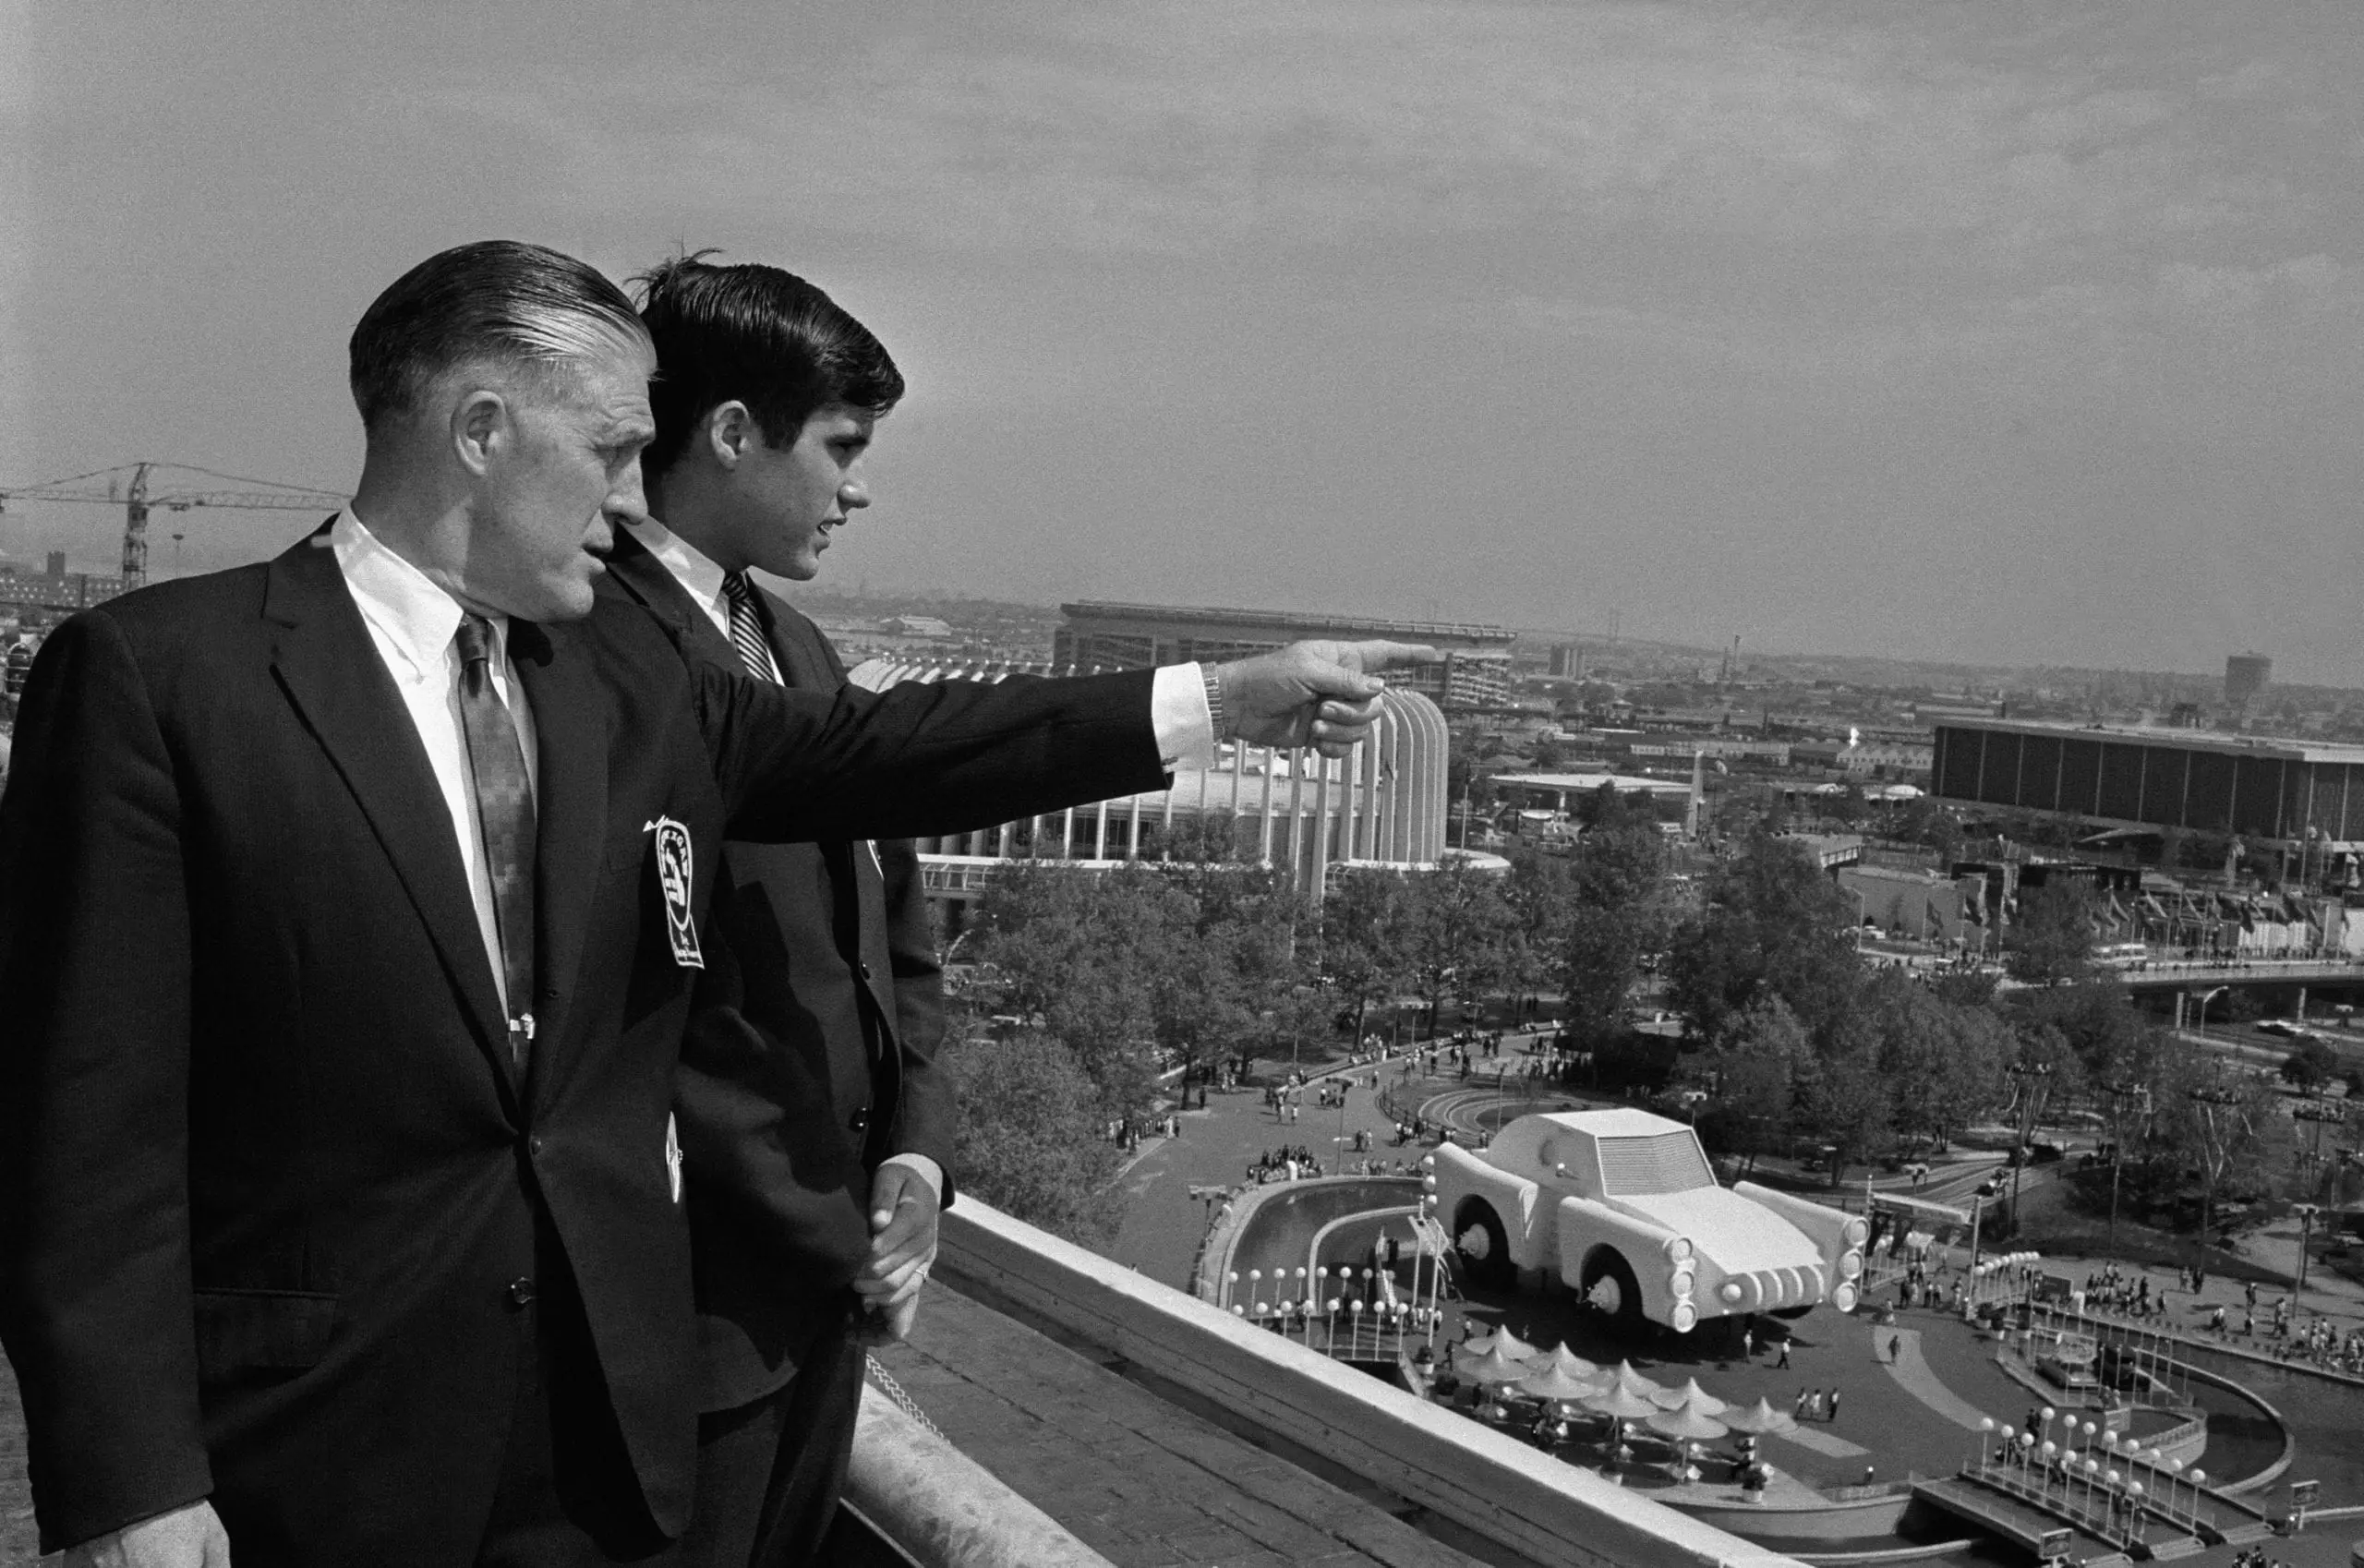 George & Mitt Romney at the World's Fair in 1964